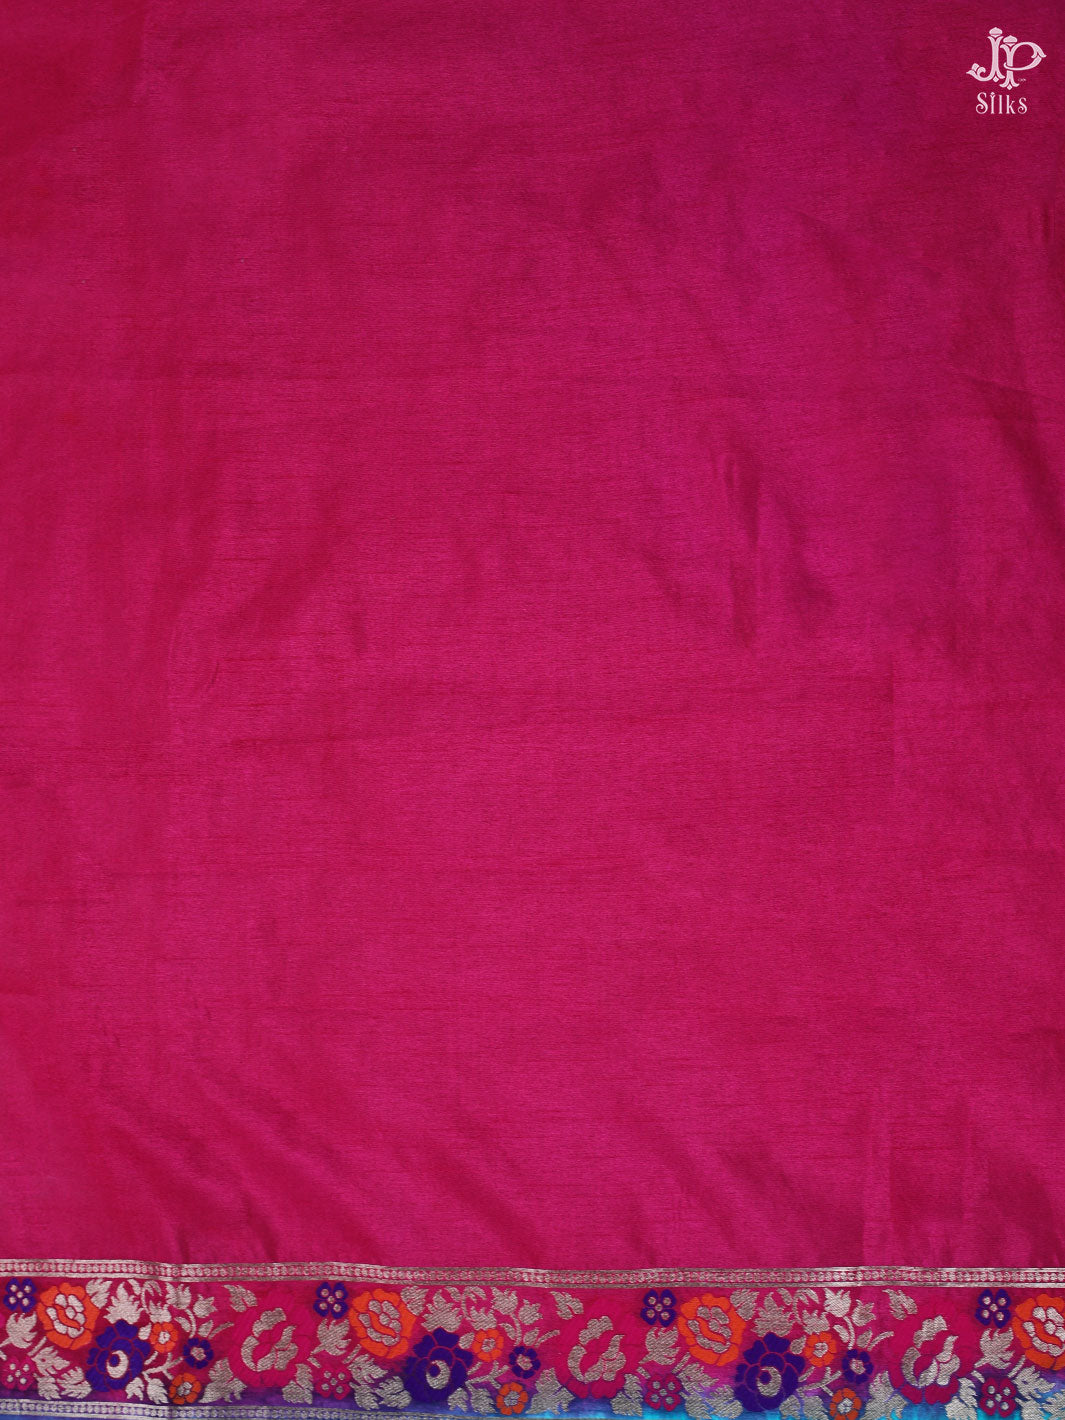 Teal Blue and Pink Organza Silk Saree - D7279 - View 3